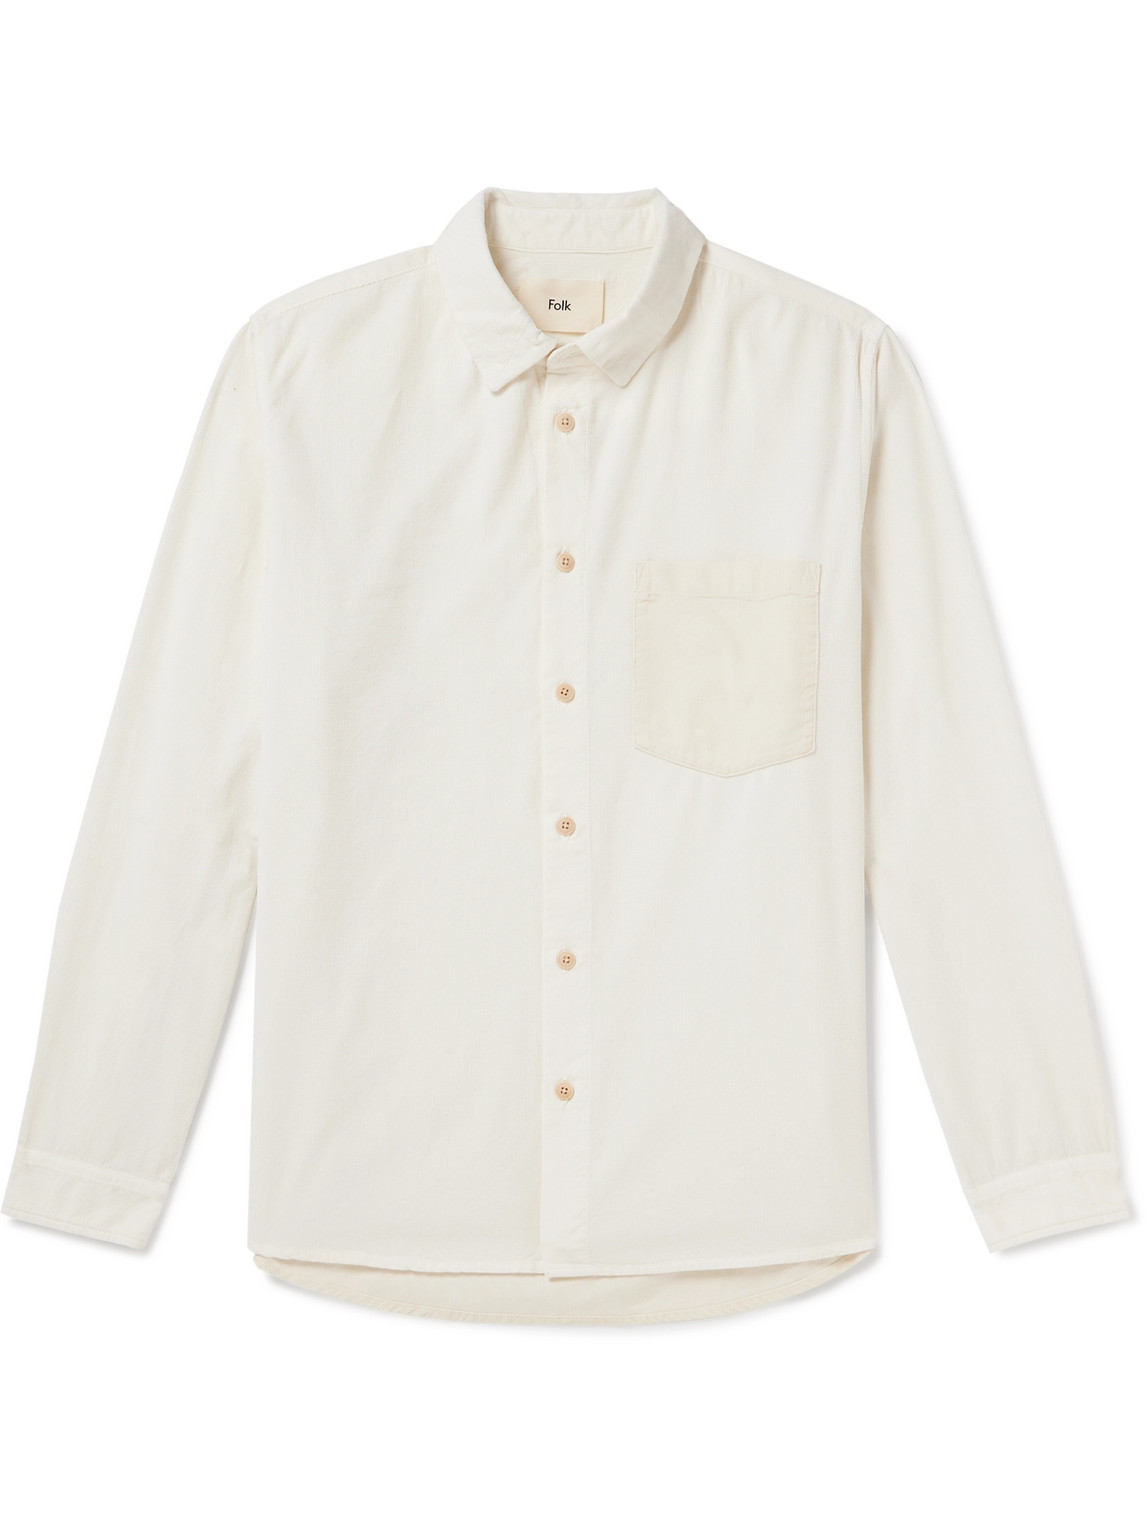 Folk Two-tone Babycord Shirt In Cream